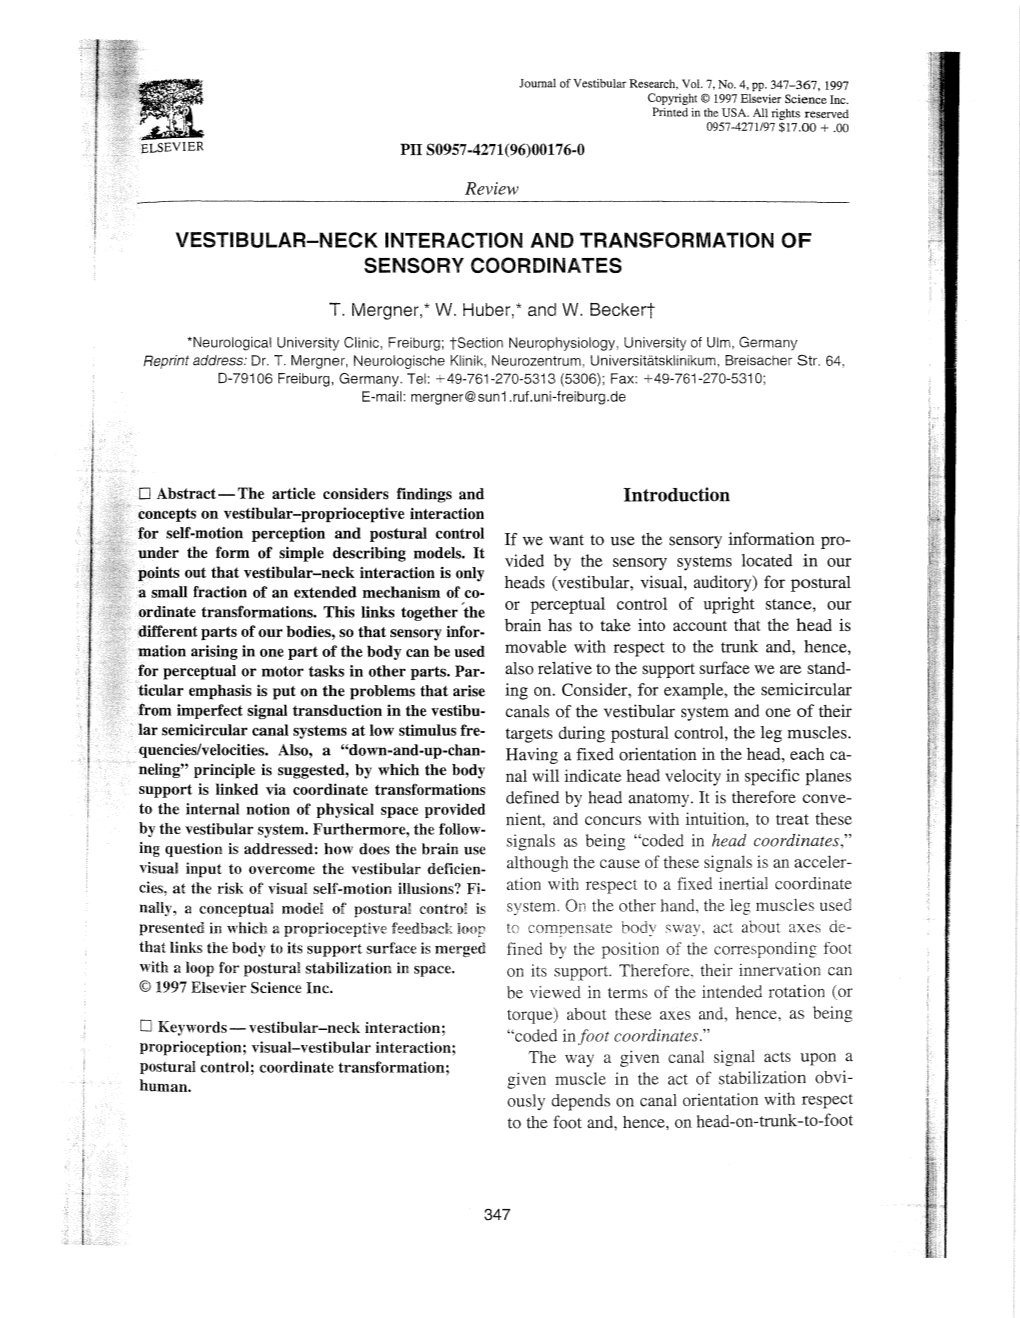 VESTIBULAR-NECK INTERACTION and TRANSFORMATION of SENSORY COORDINATES Introduction